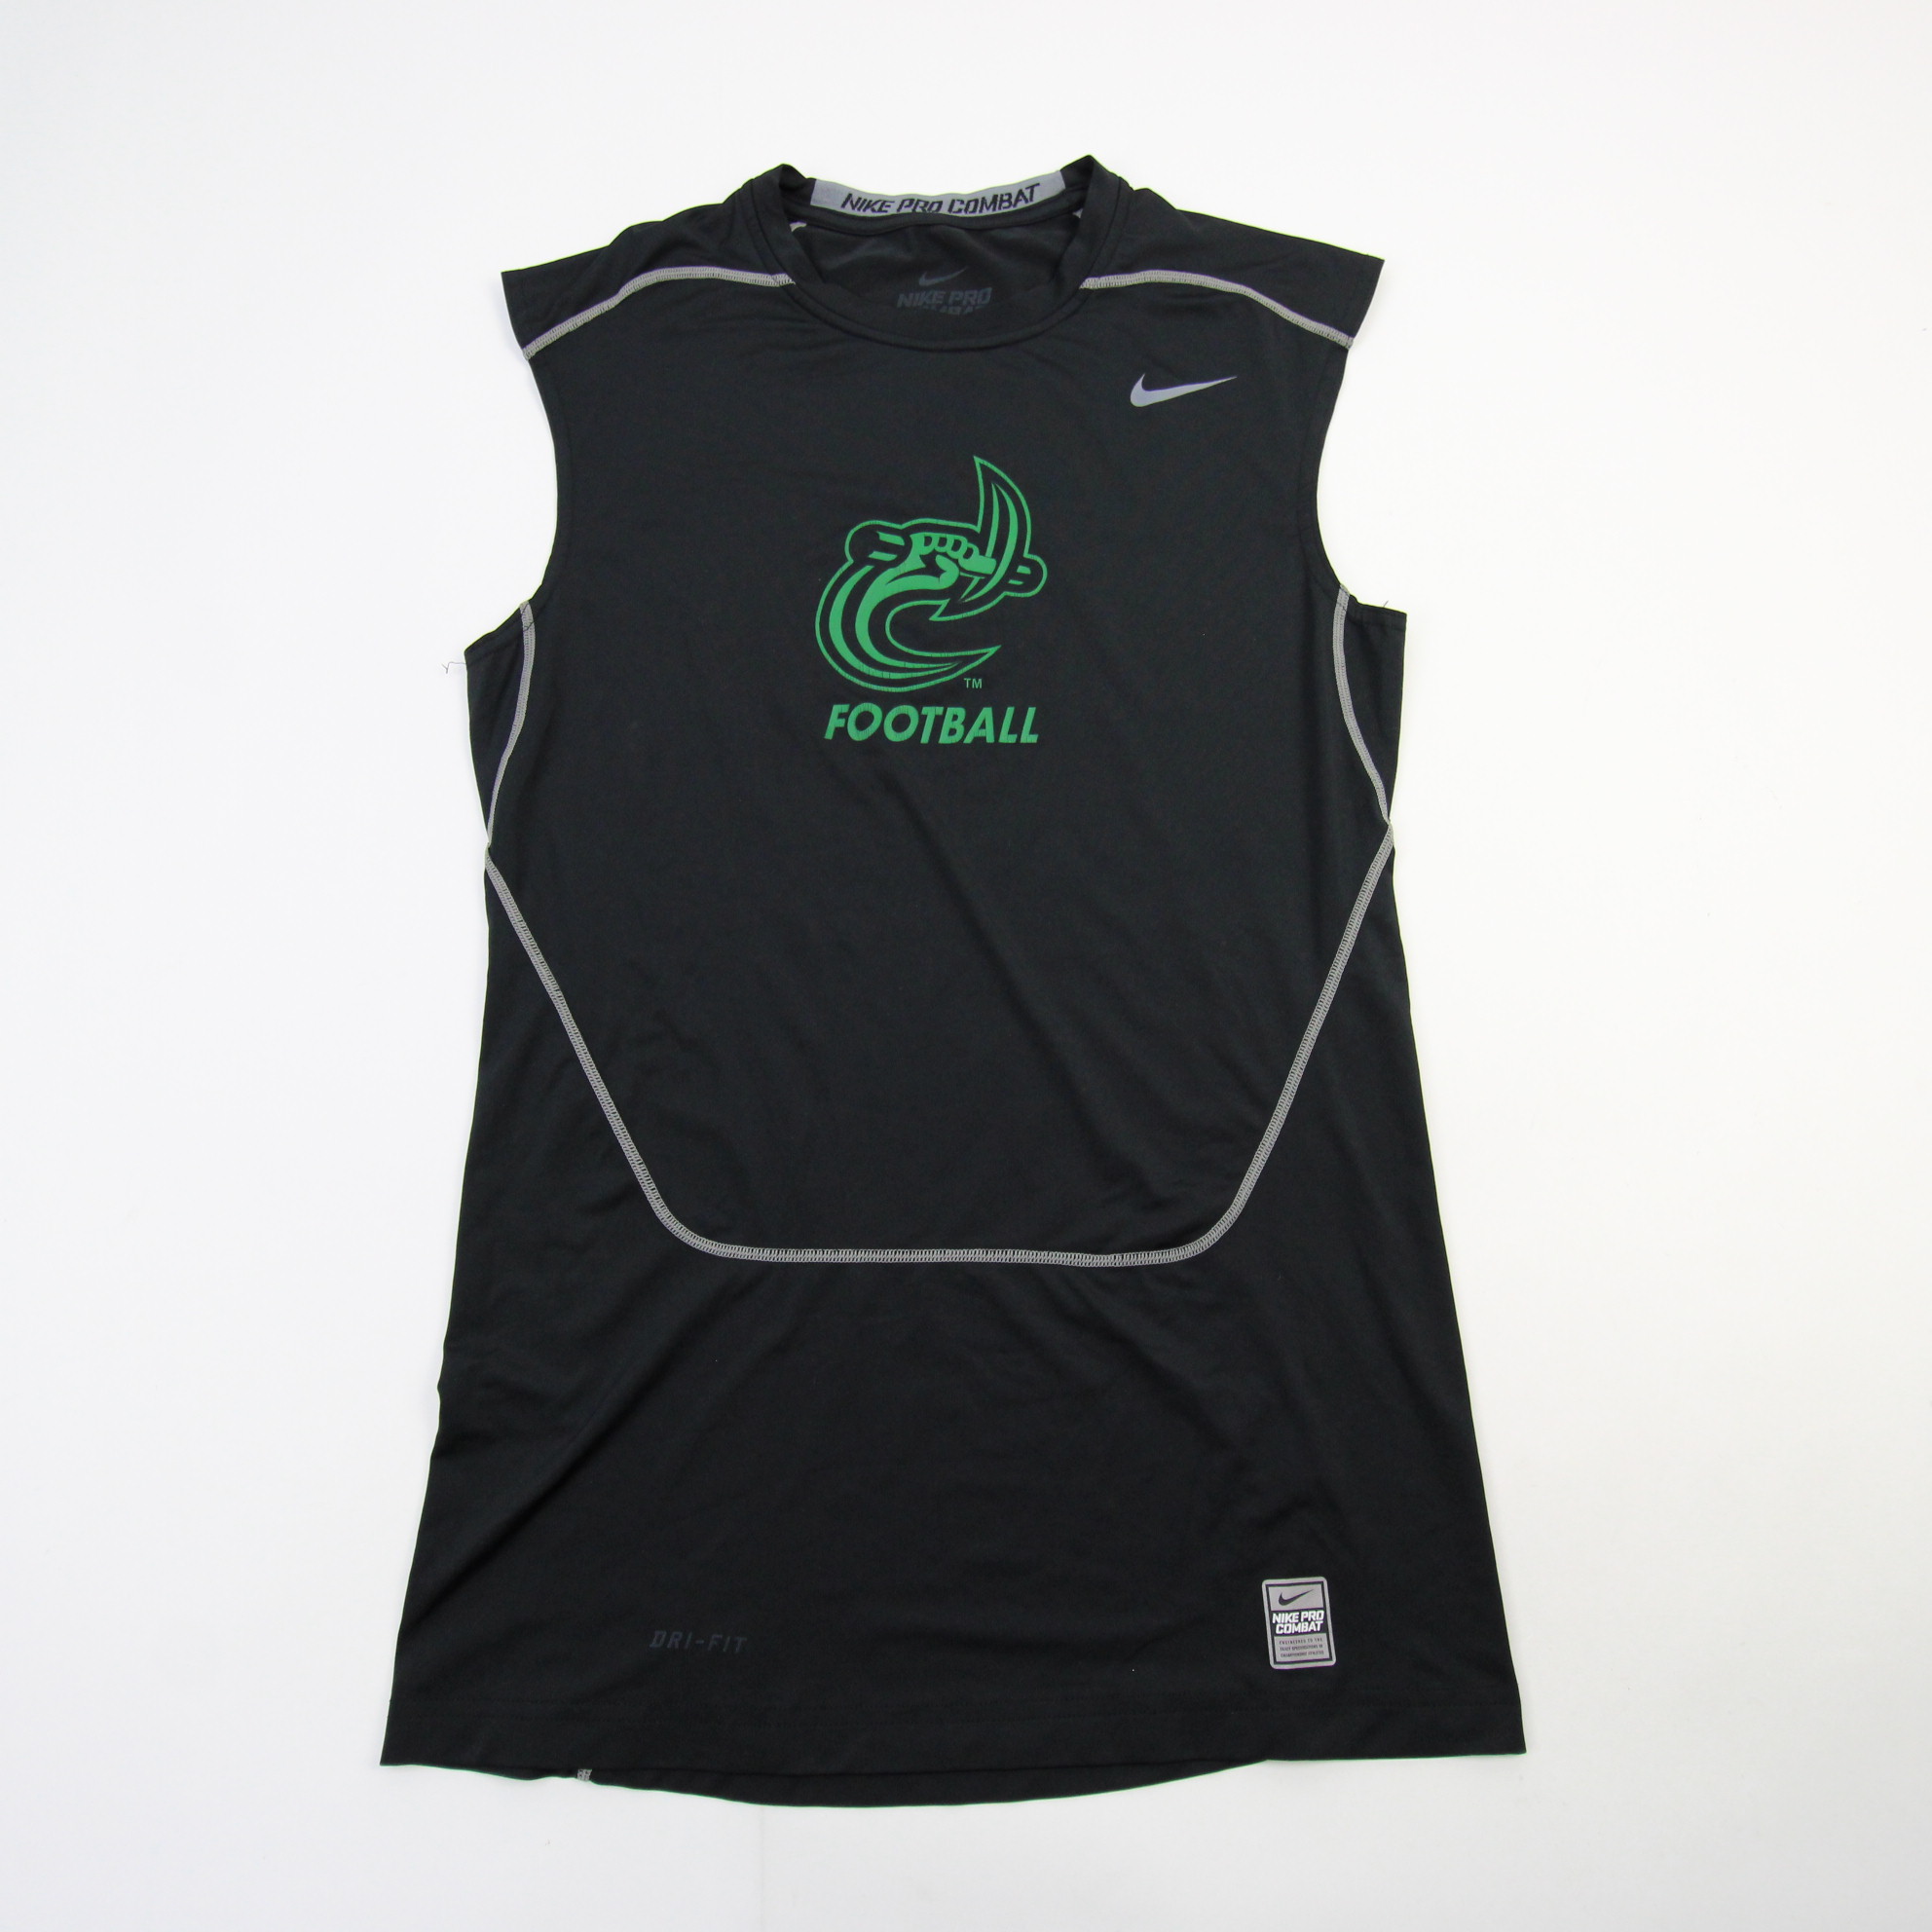 New Men's Nike Pro Combat Black Dri-Fit Sleeveless Football